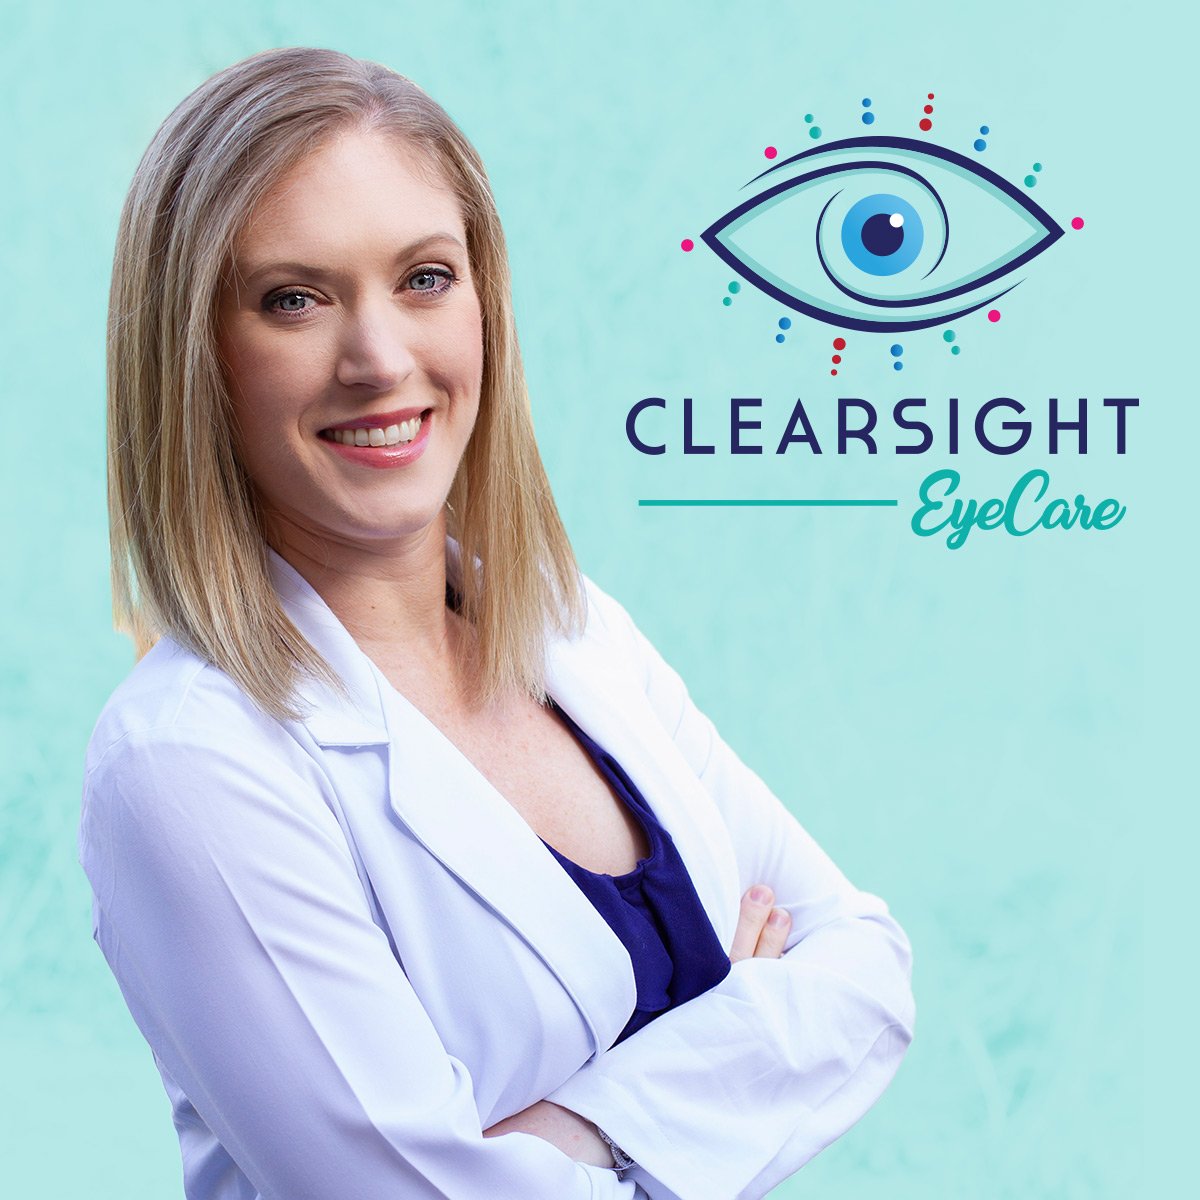 https://clearsightswva.com/wp-content/uploads/2021/06/clearsight-eyecare-og.jpg